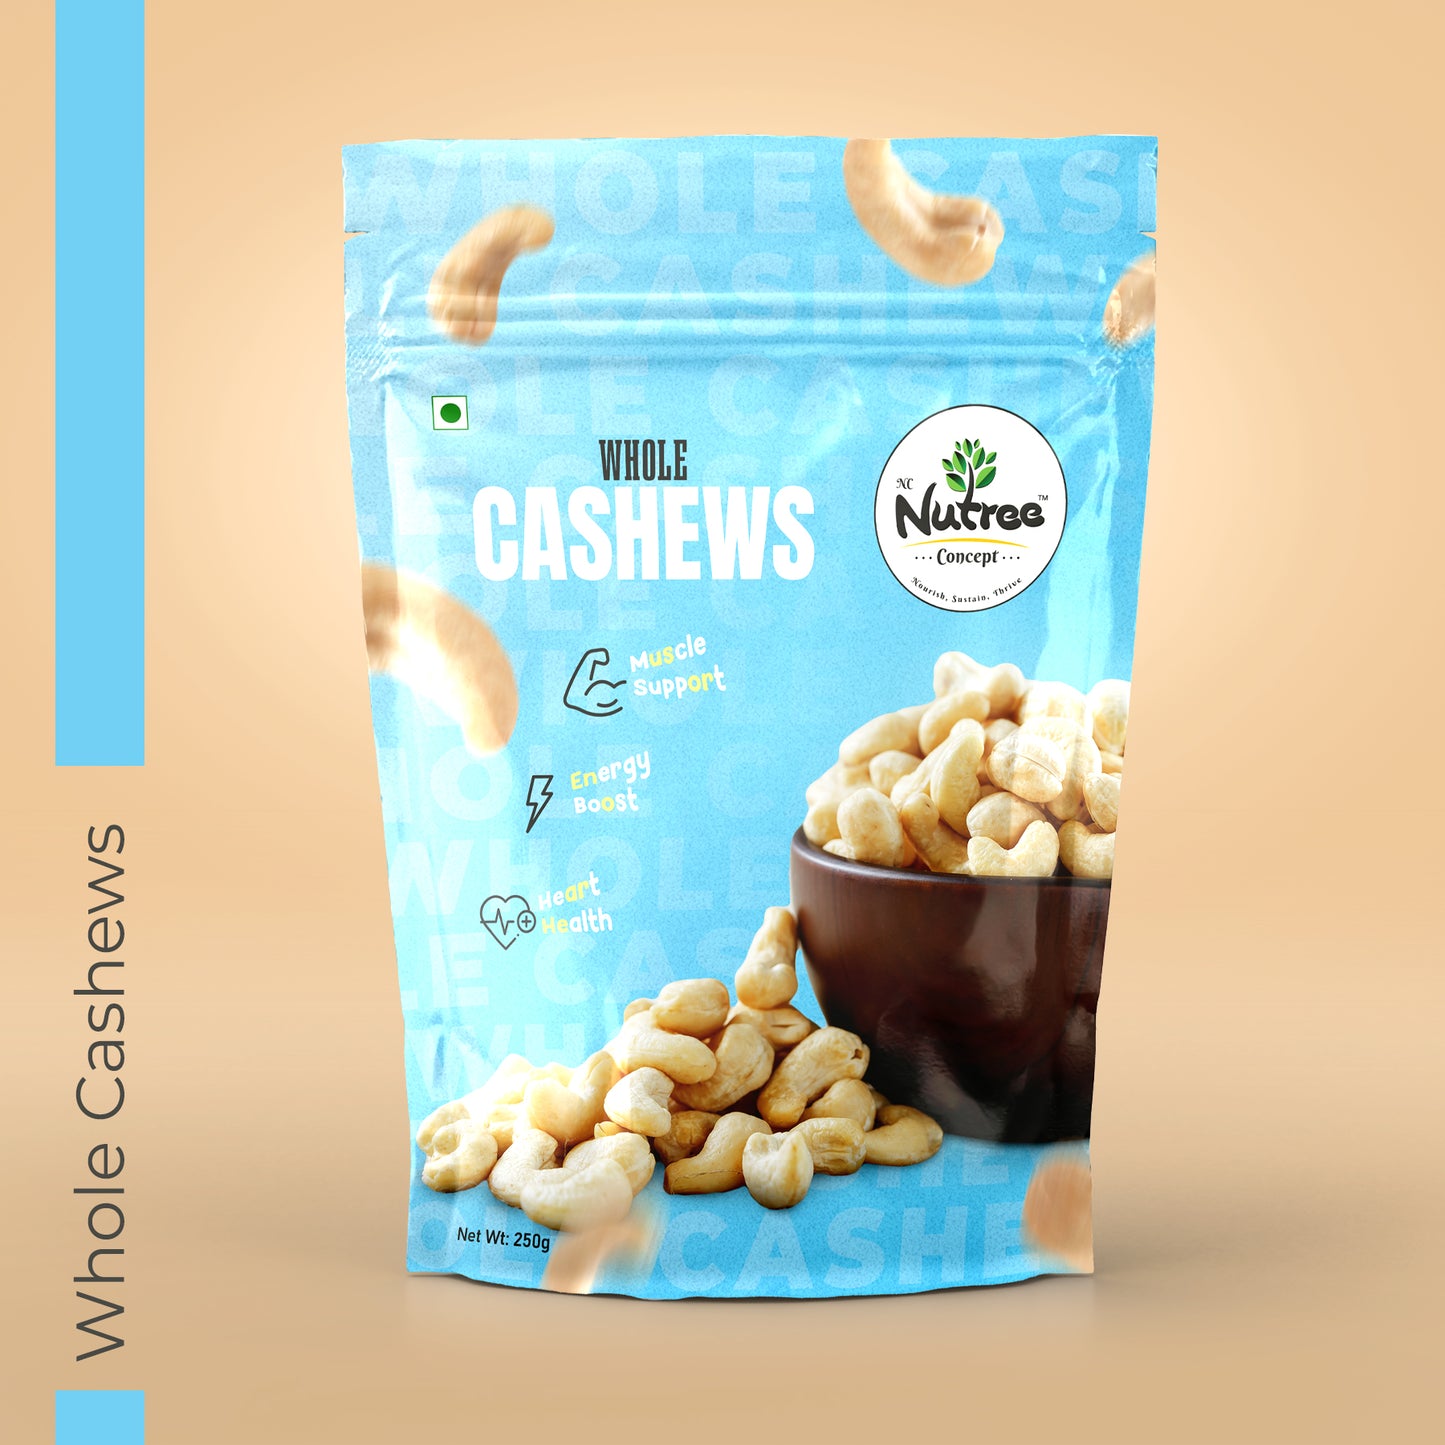 Whole Cashews - Creamy Goodness